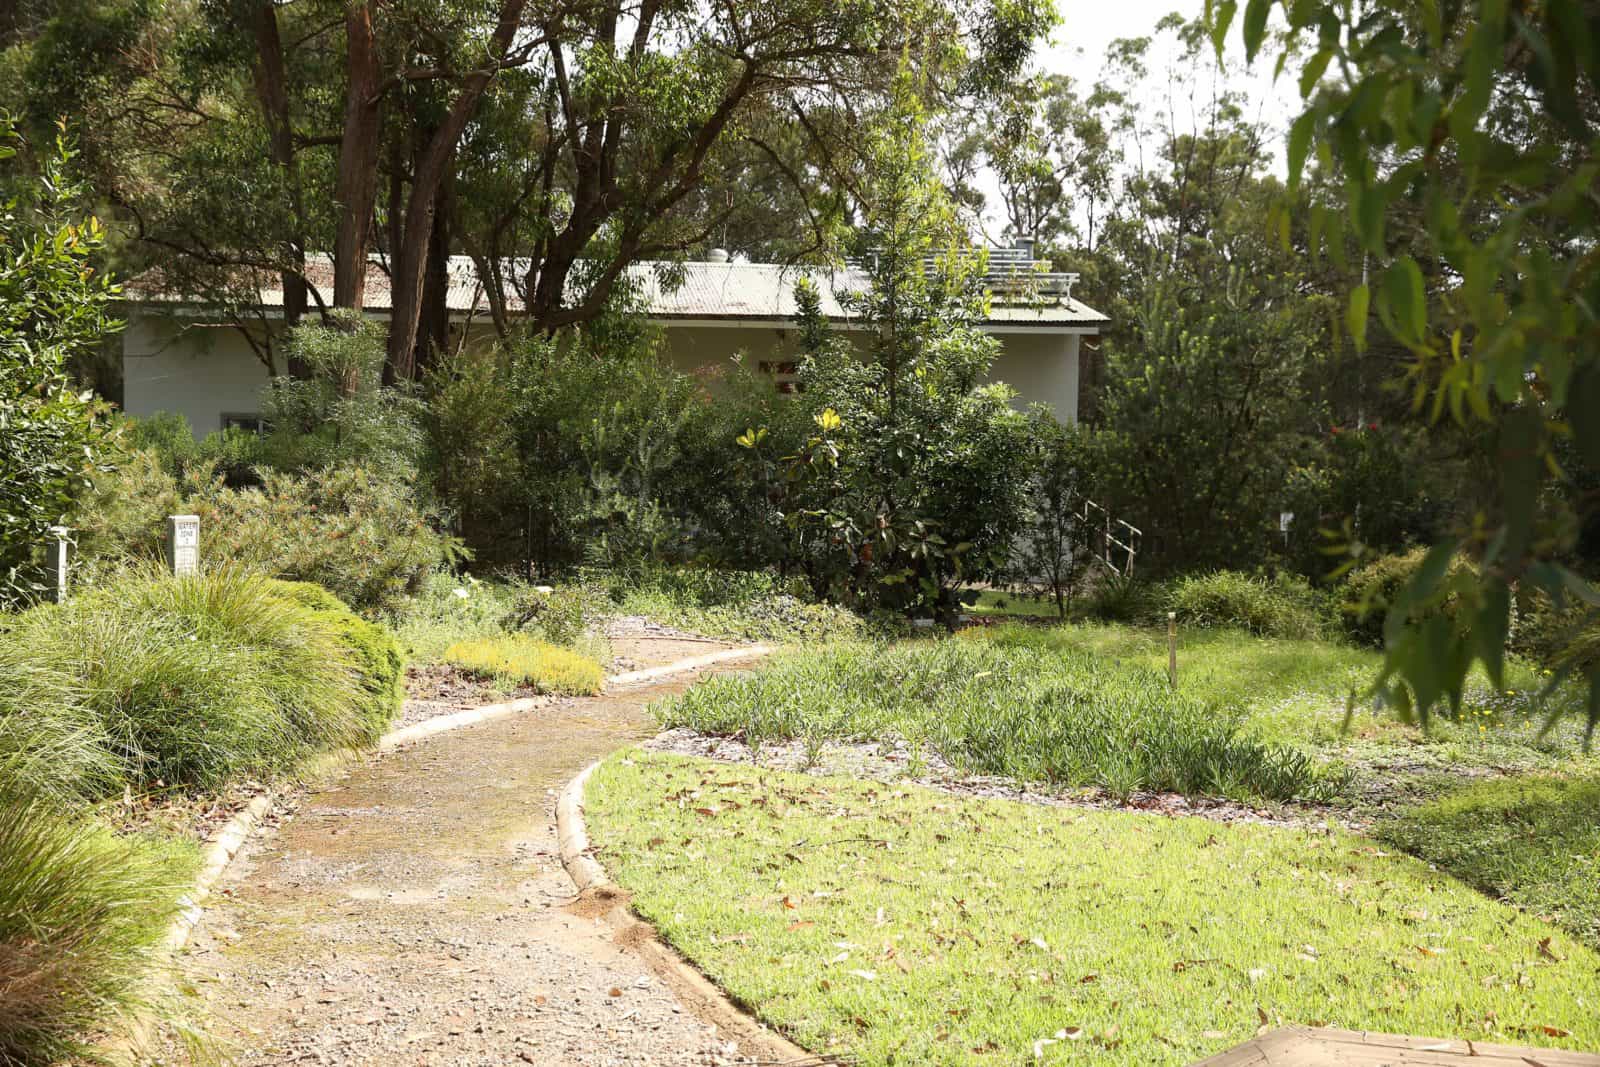 Annangrove community garden